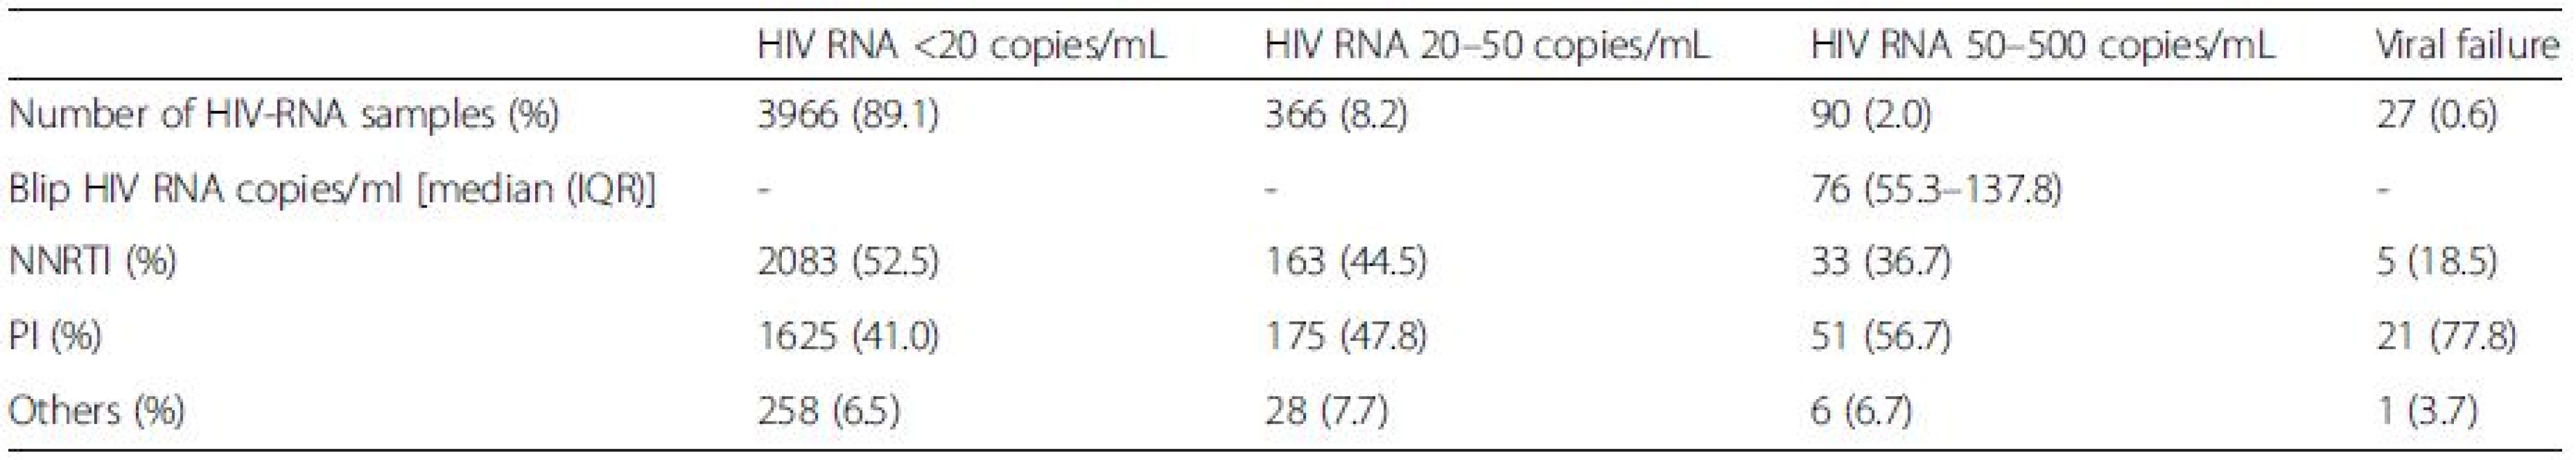 HIV RNA levels and ART